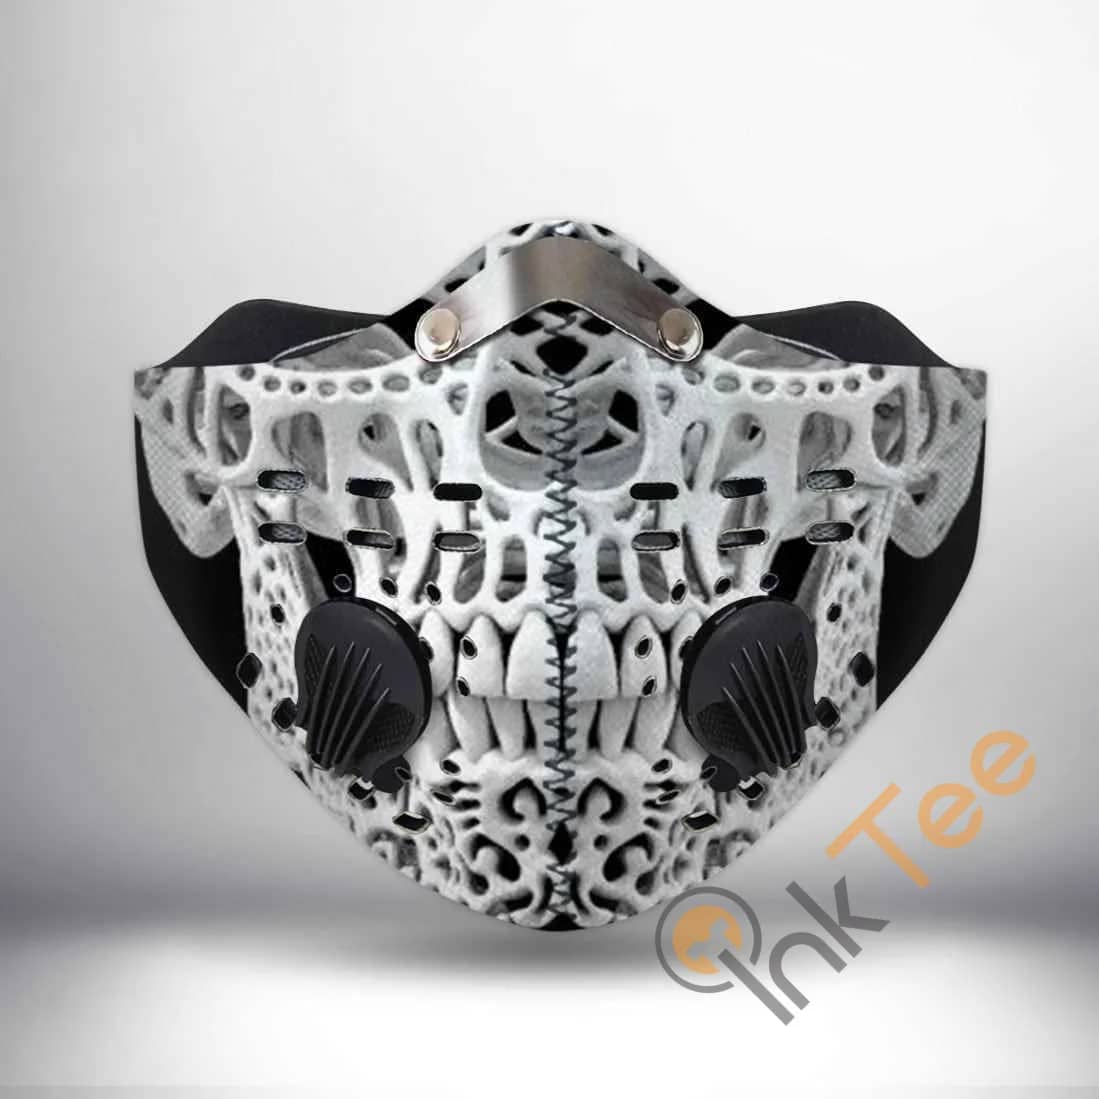 Skull Filter Activated Carbon Pm 2.5 Fm Sku 521 Face Mask